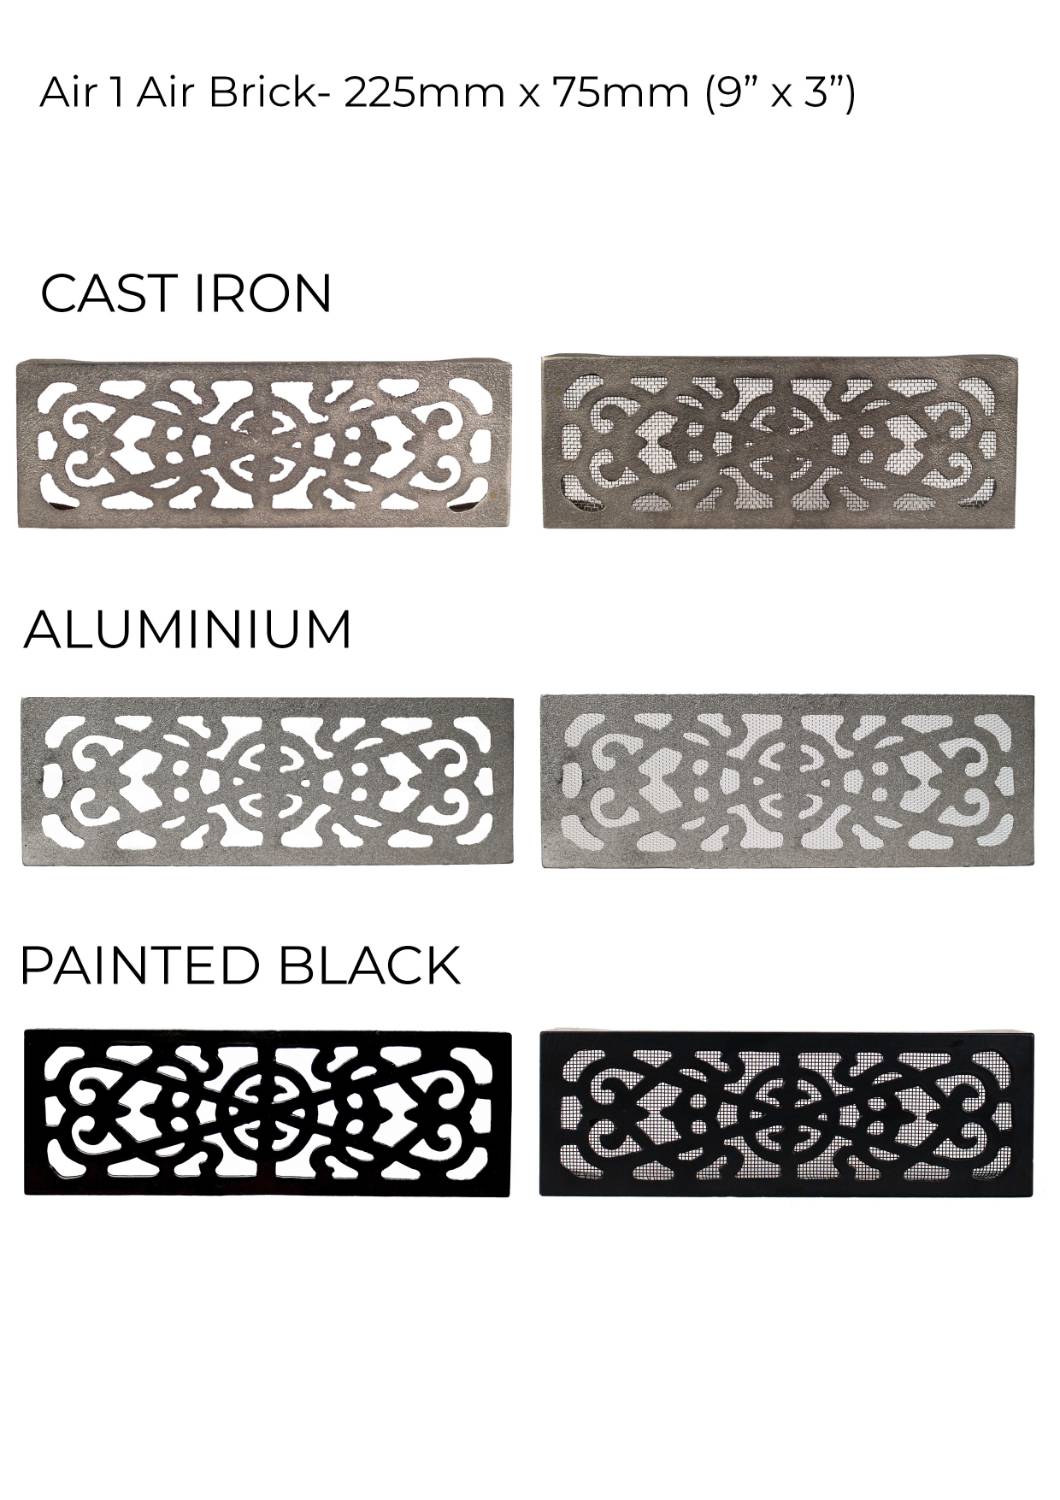 Air Bricks - cast iron and aluminium 9" x  3" (225 mm x 75 mm) standard, rectangular. External or internal ventilation airbrick. - Air Brick